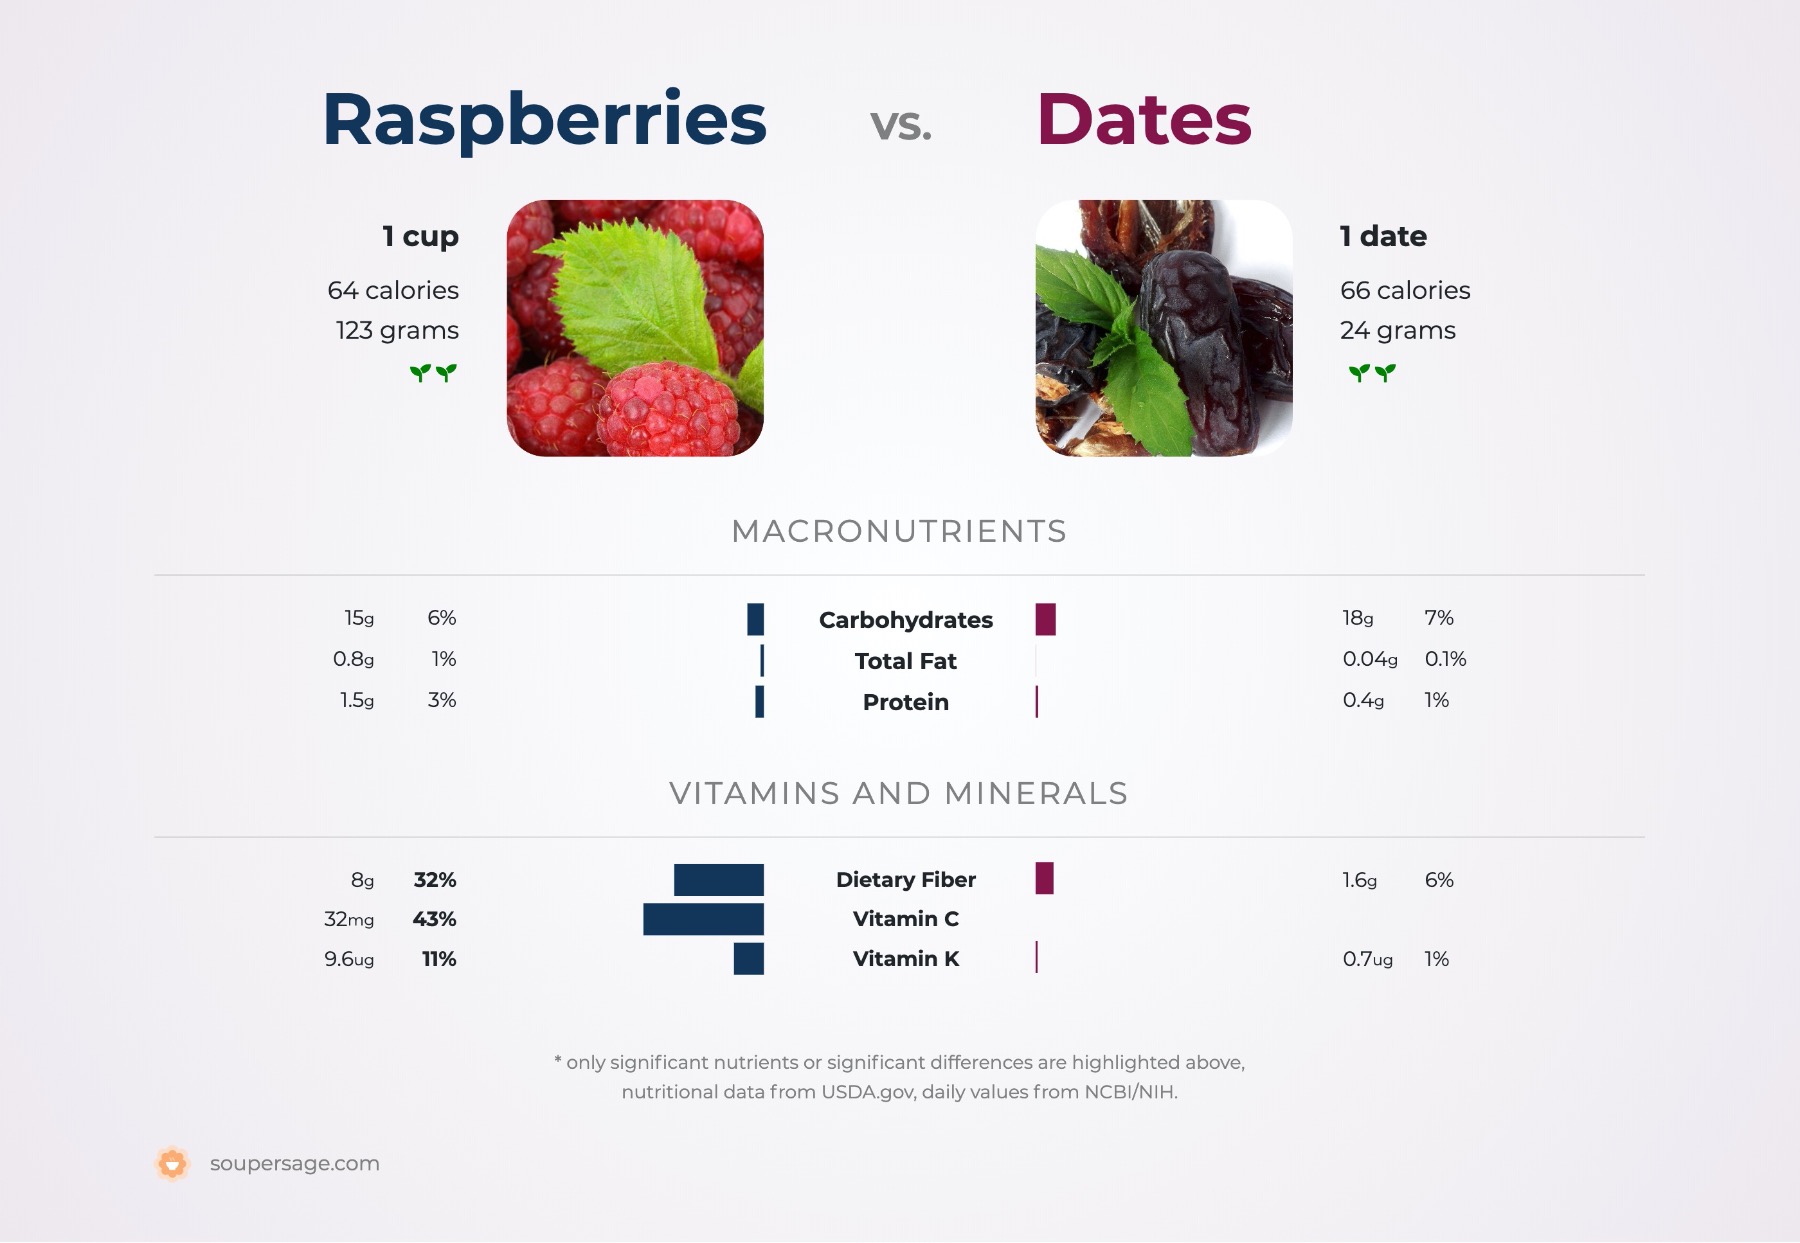 nutrition comparison of dates vs. raspberries